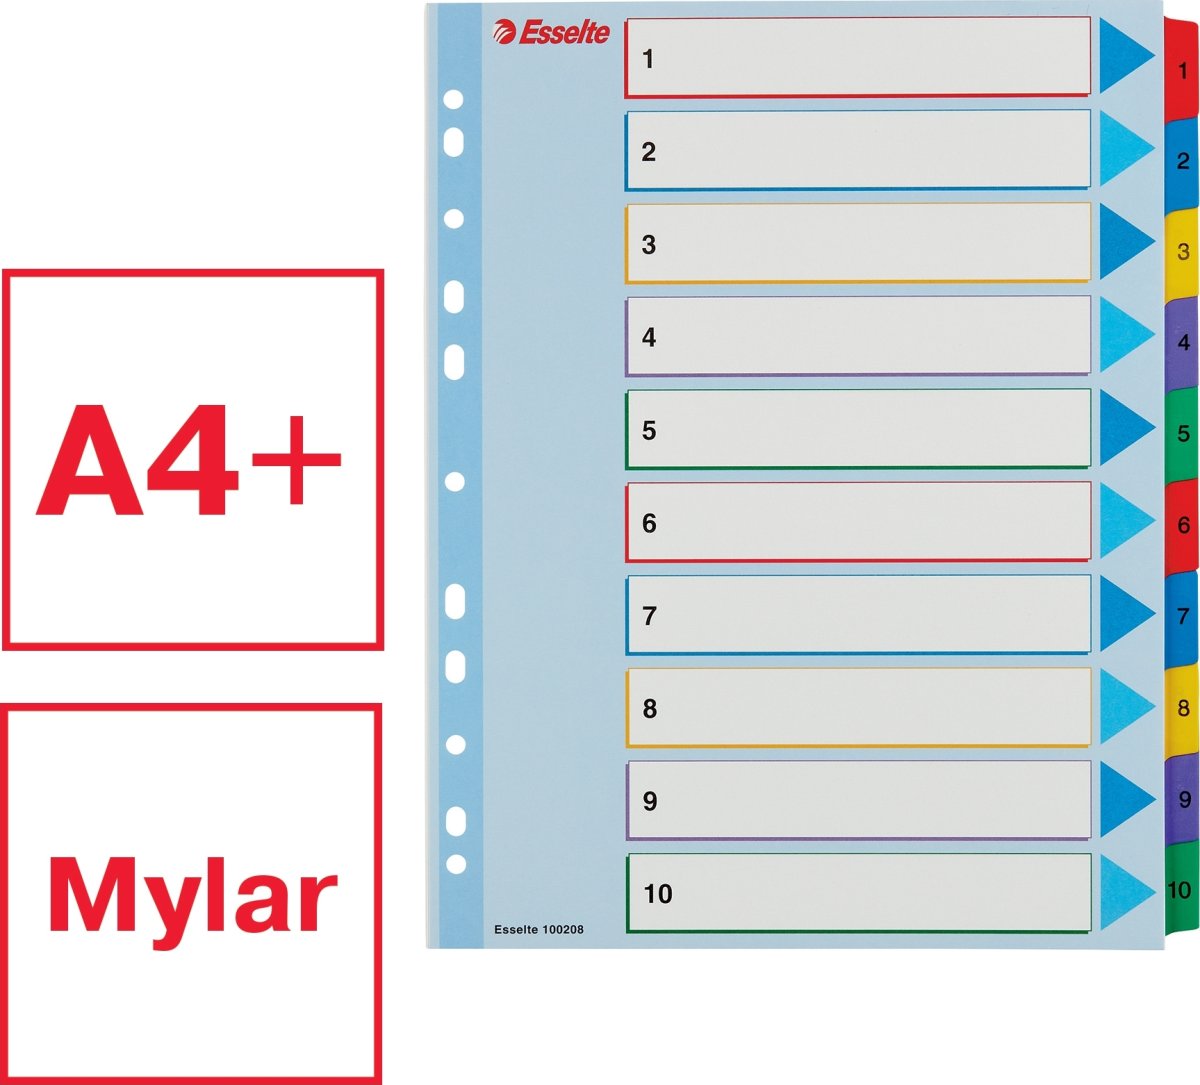 Esselte Mylar Register | A4 | Overskriv | 1-10